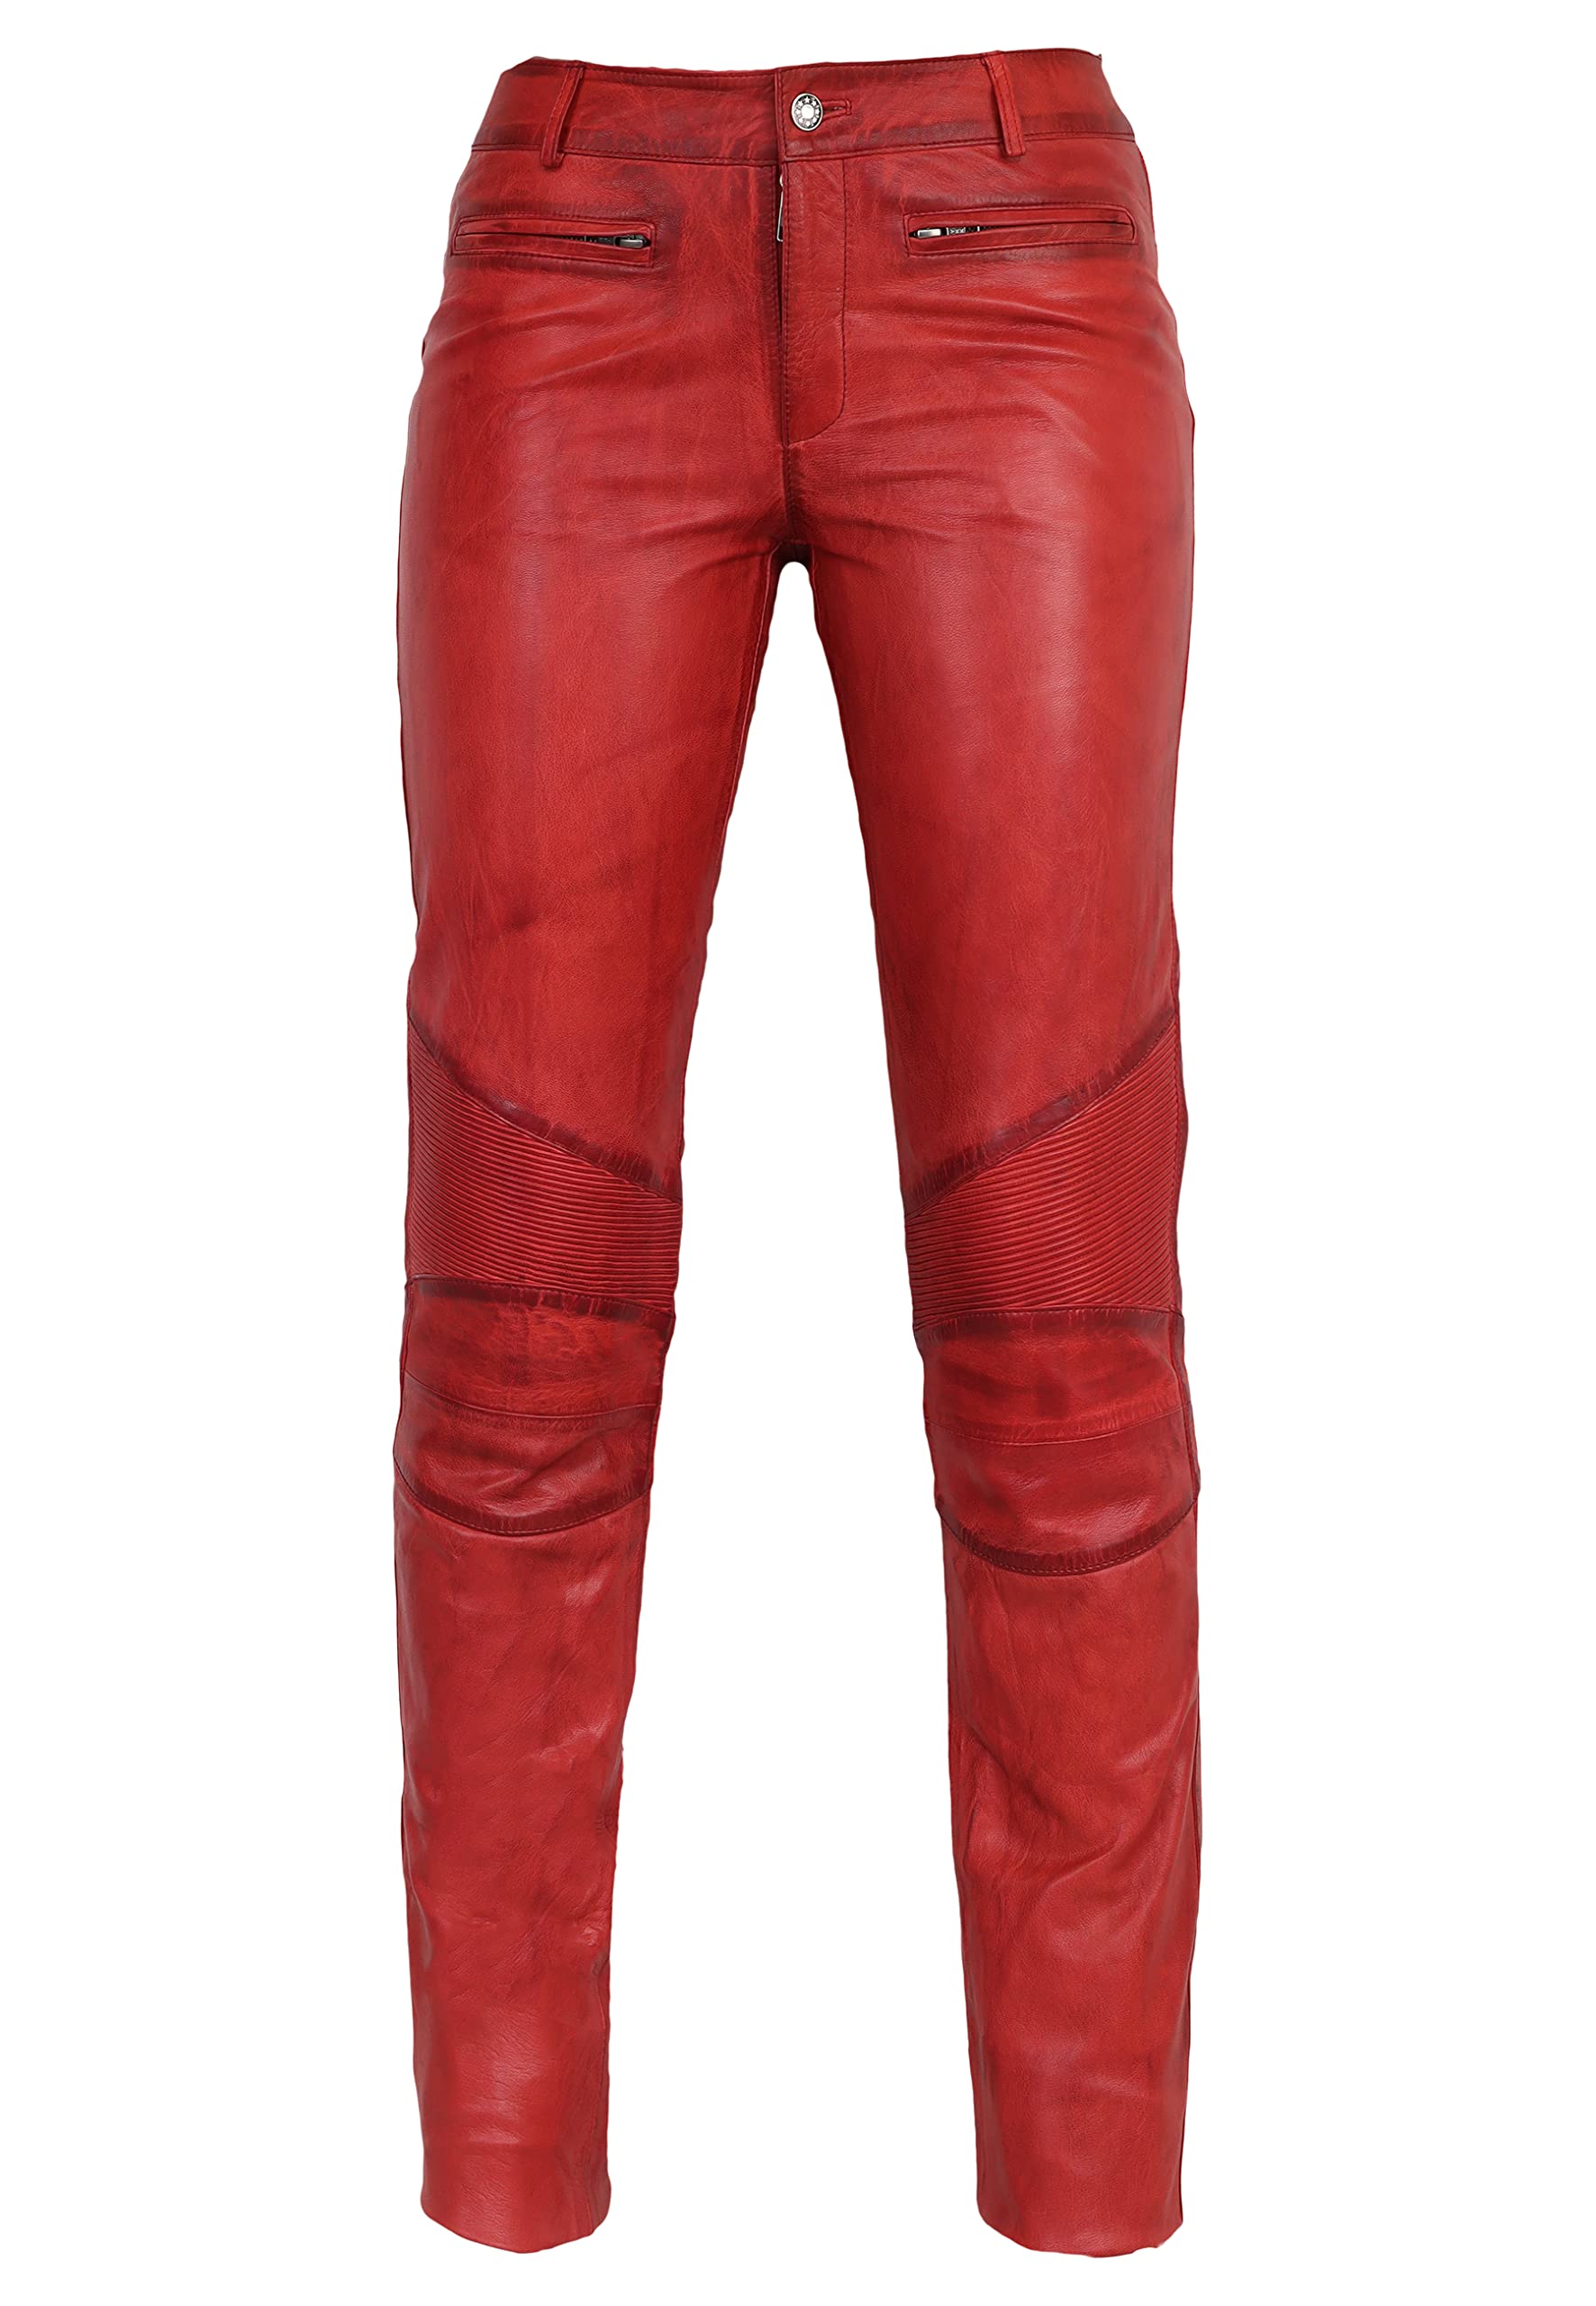 RICANO Donna - Damen Lederhose in Biker-Optik (Slim Fit/Regular Waist) - echtes (Premium) Ziegen Leder (Rot, 2XL)